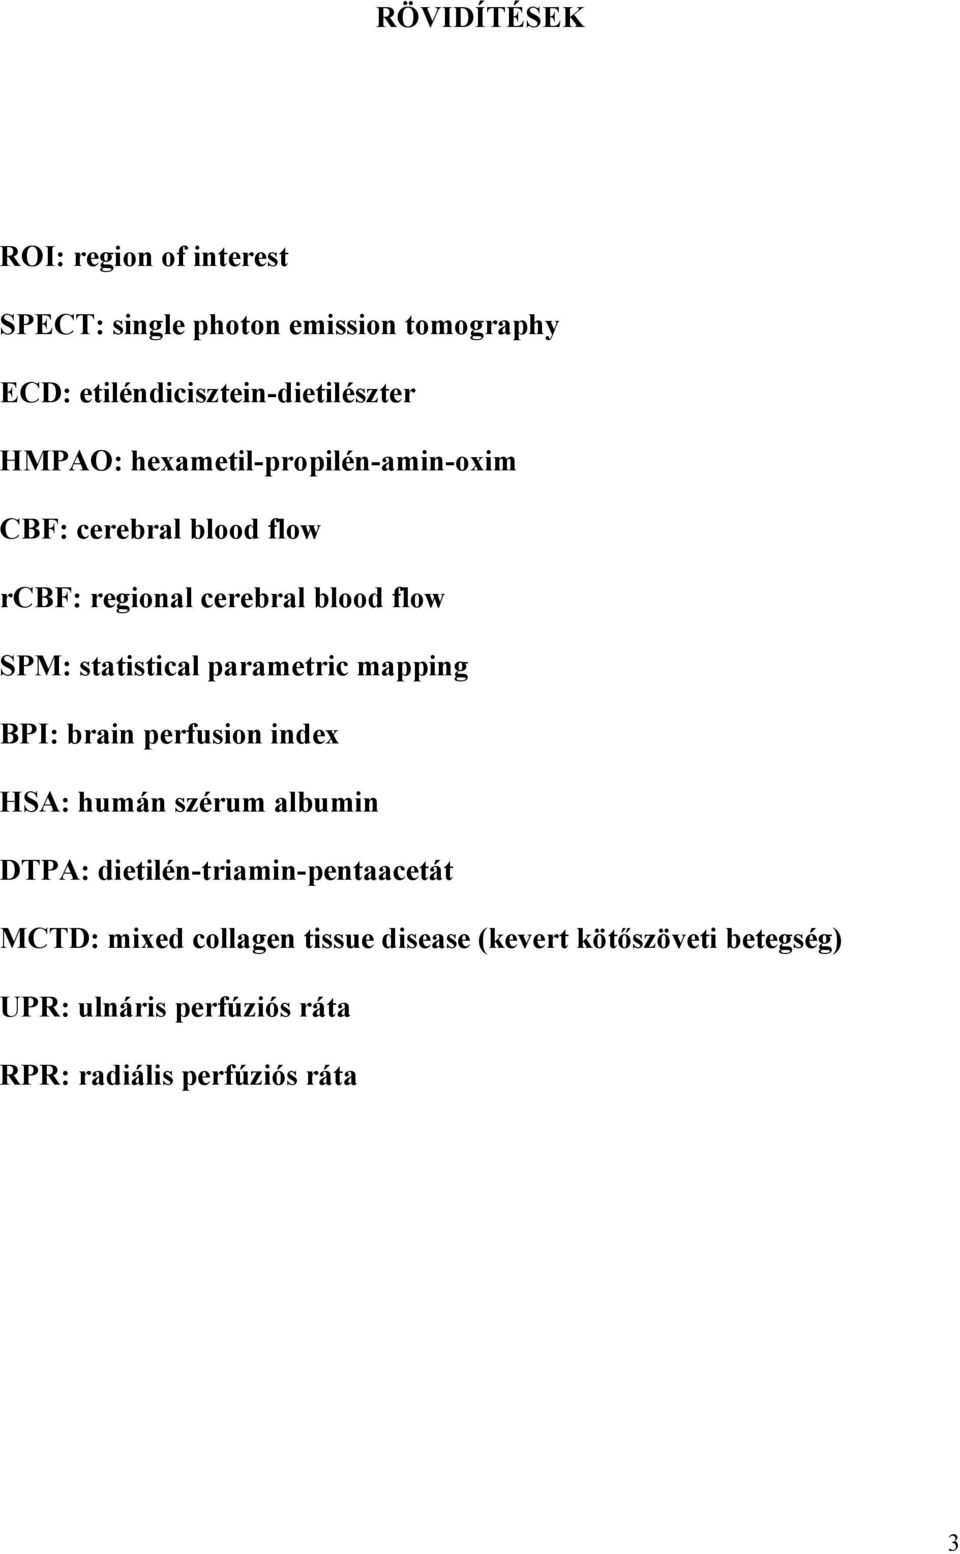 parametric mapping BPI: brain perfusion index HSA: humán szérum albumin DTPA: dietilén-triamin-pentaacetát MCTD: